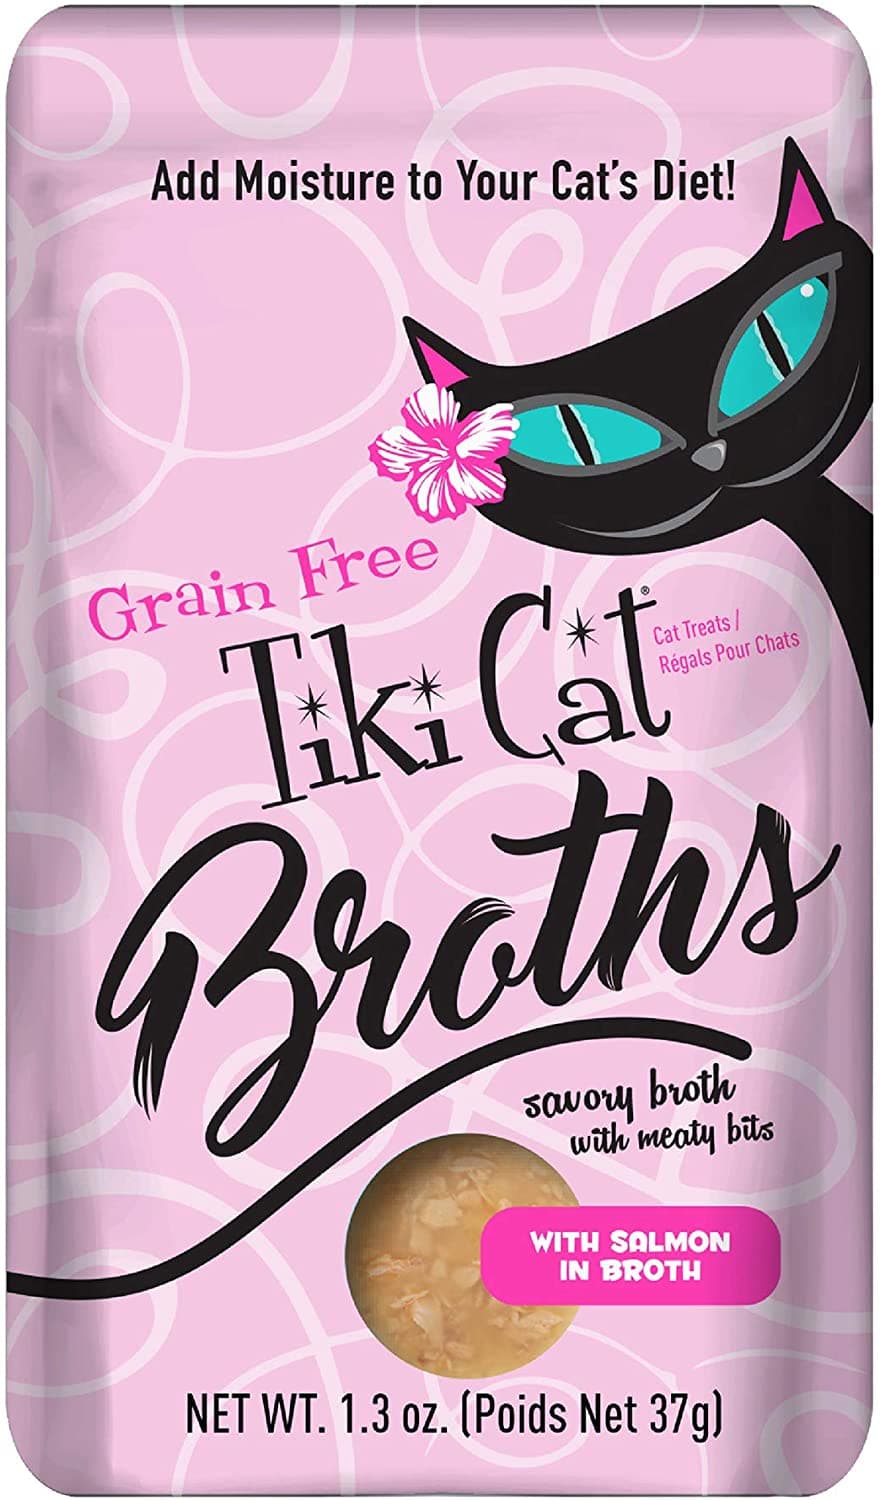 Tiki Cat Broth Salmon -1.3 oz pouch